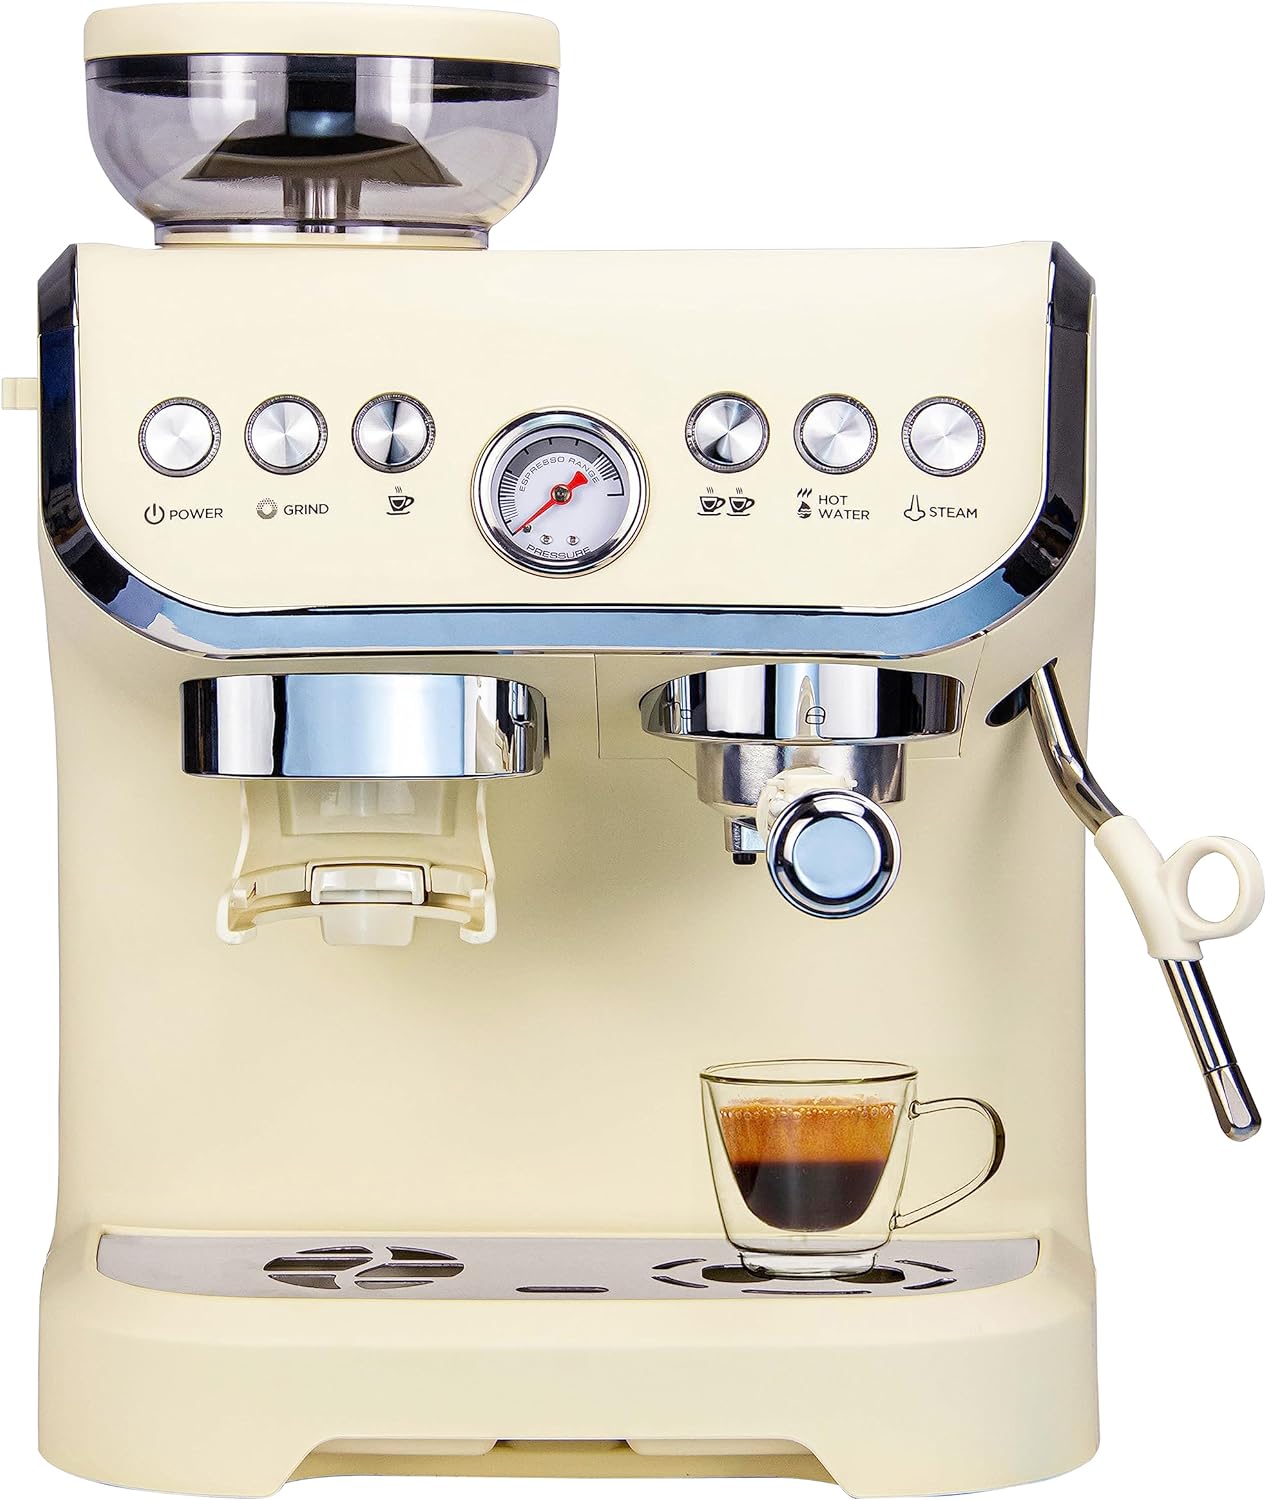 MIROX Espresso Coffee Maker Review